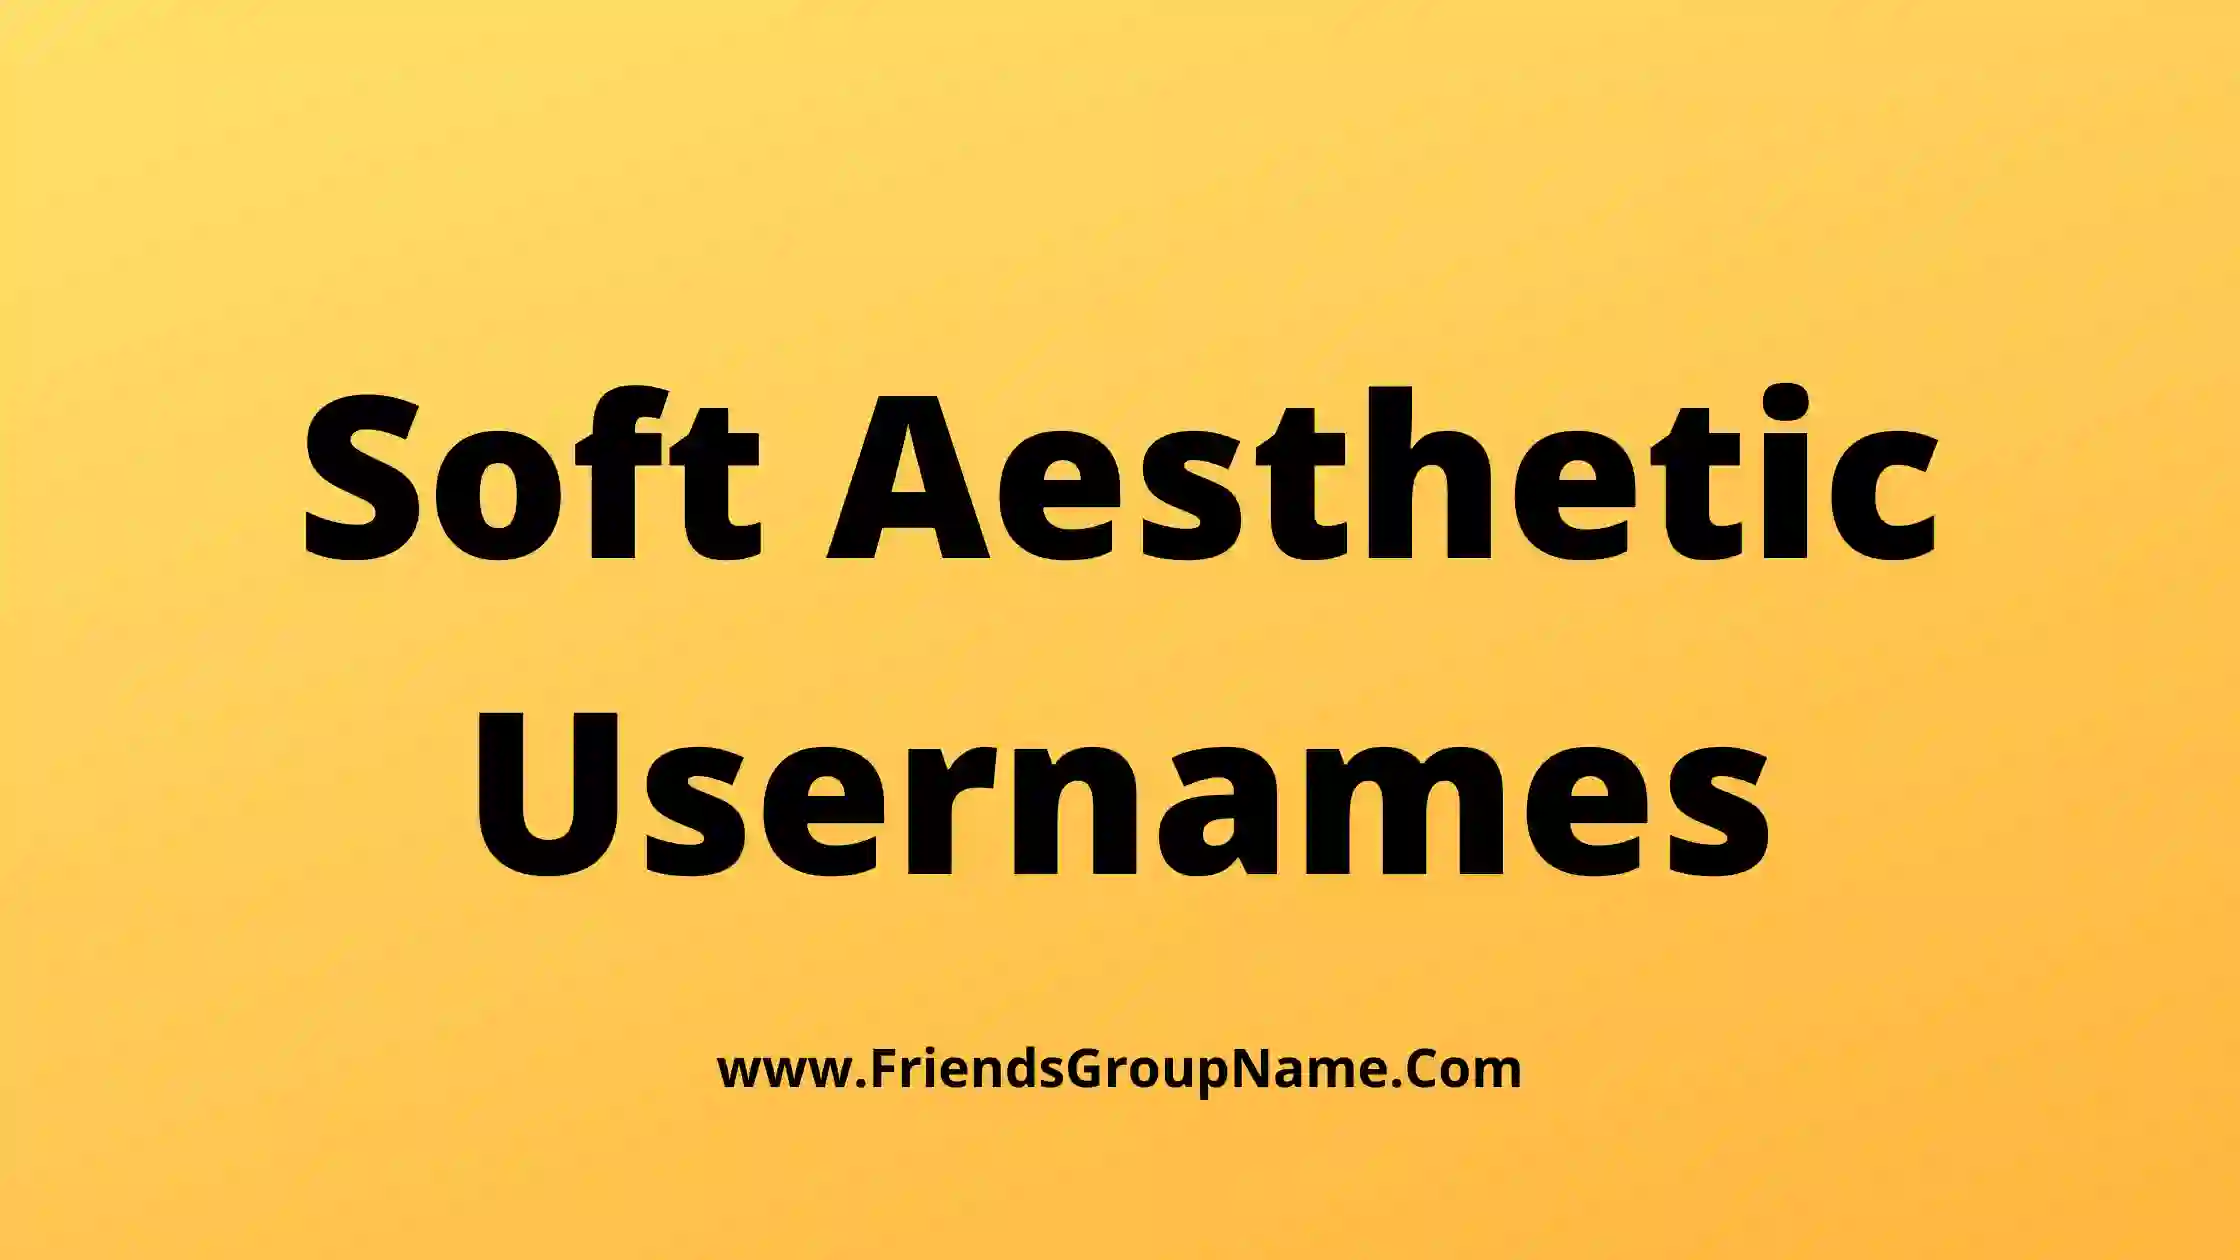 Soft Aesthetic Usernames